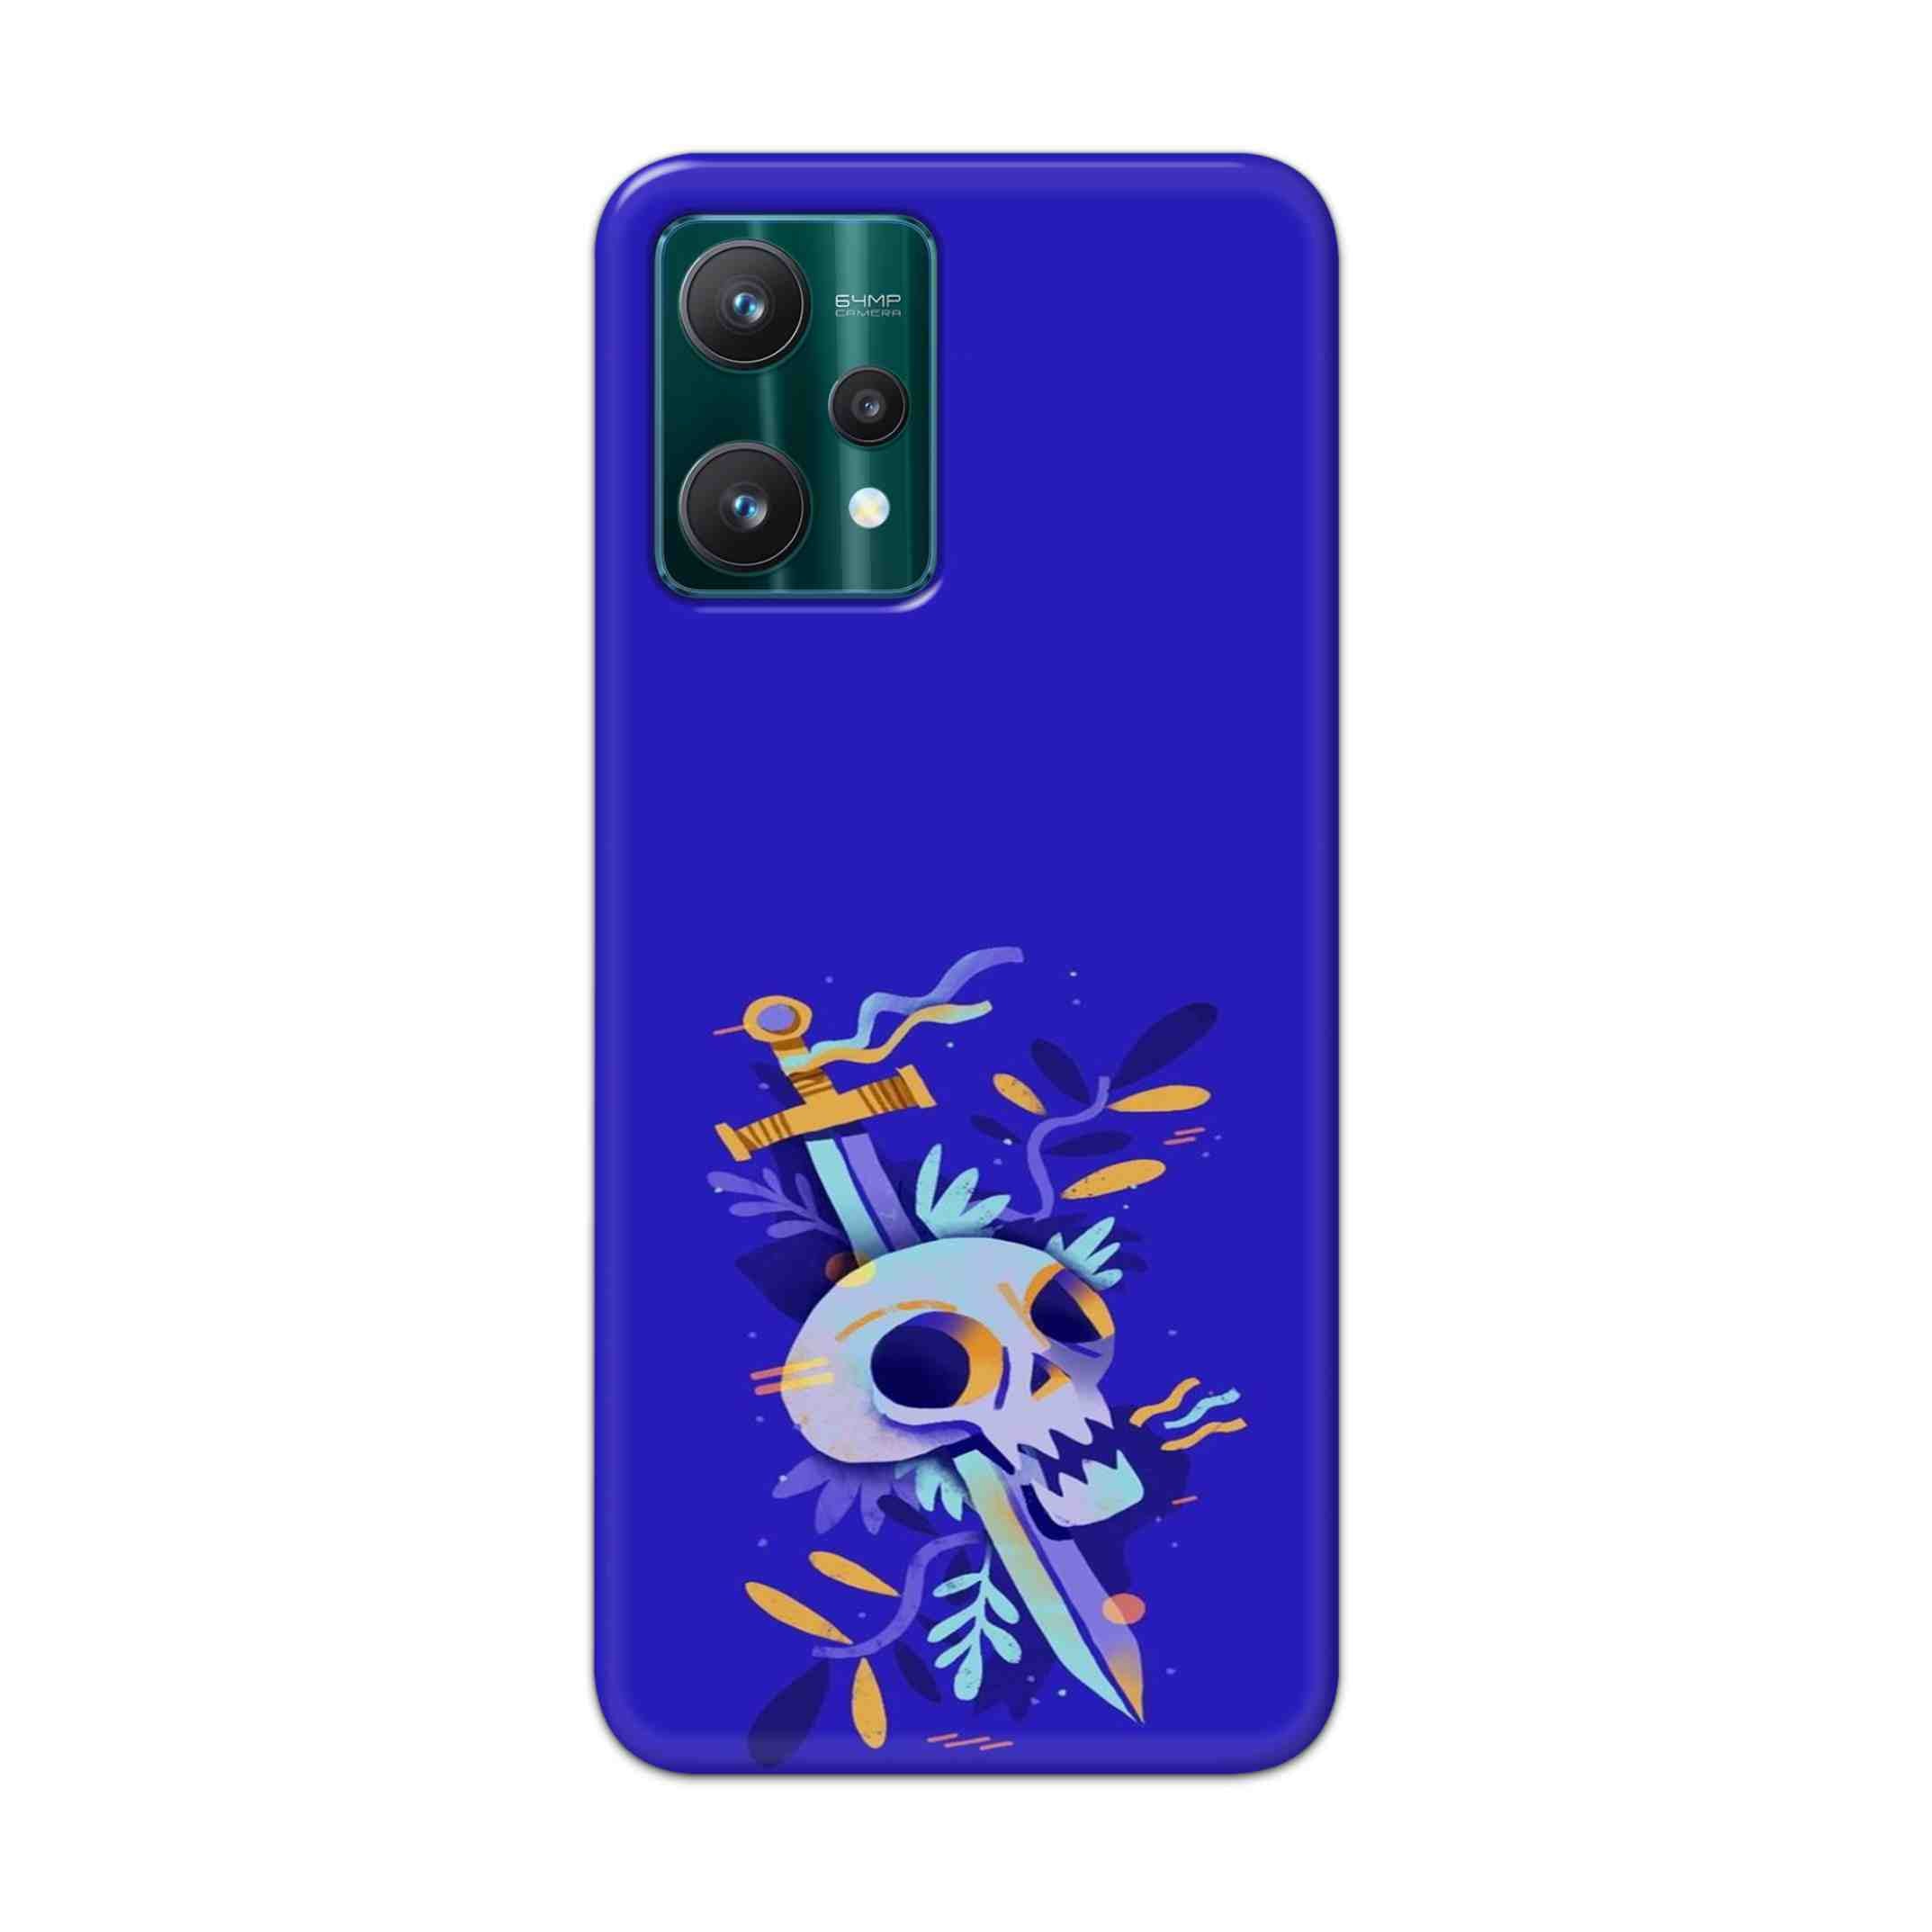 Buy Blue Skull Hard Back Mobile Phone Case Cover For Realme 9 Pro Online